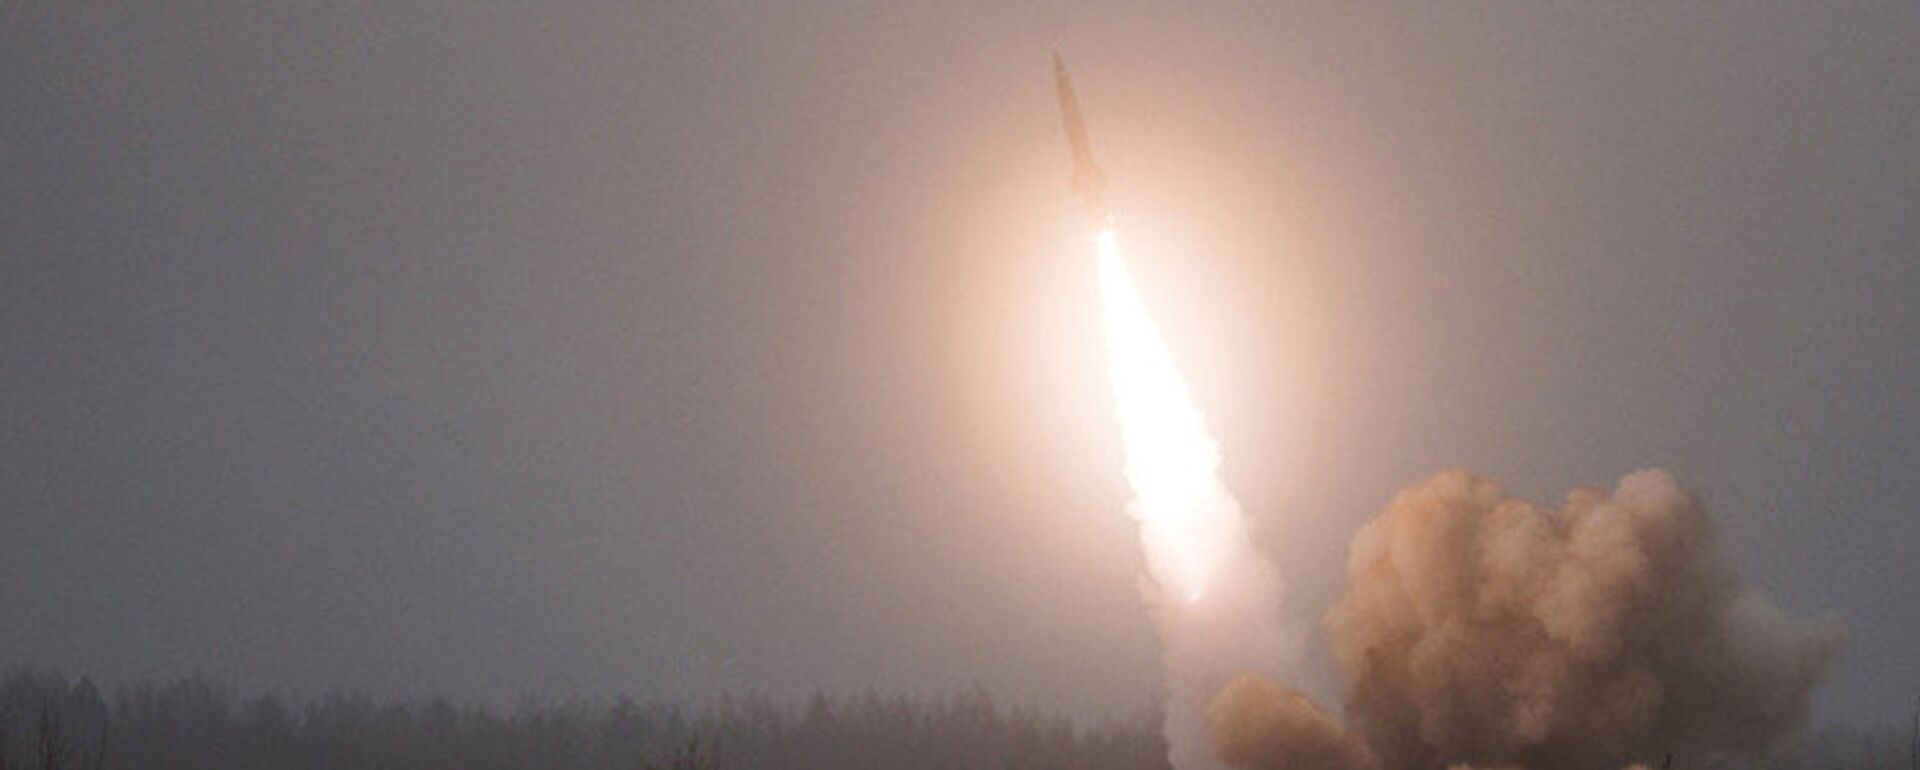 روسيا تختبر صاروخ تسيركون  - سبوتنيك عربي, 1920, 16.12.2021